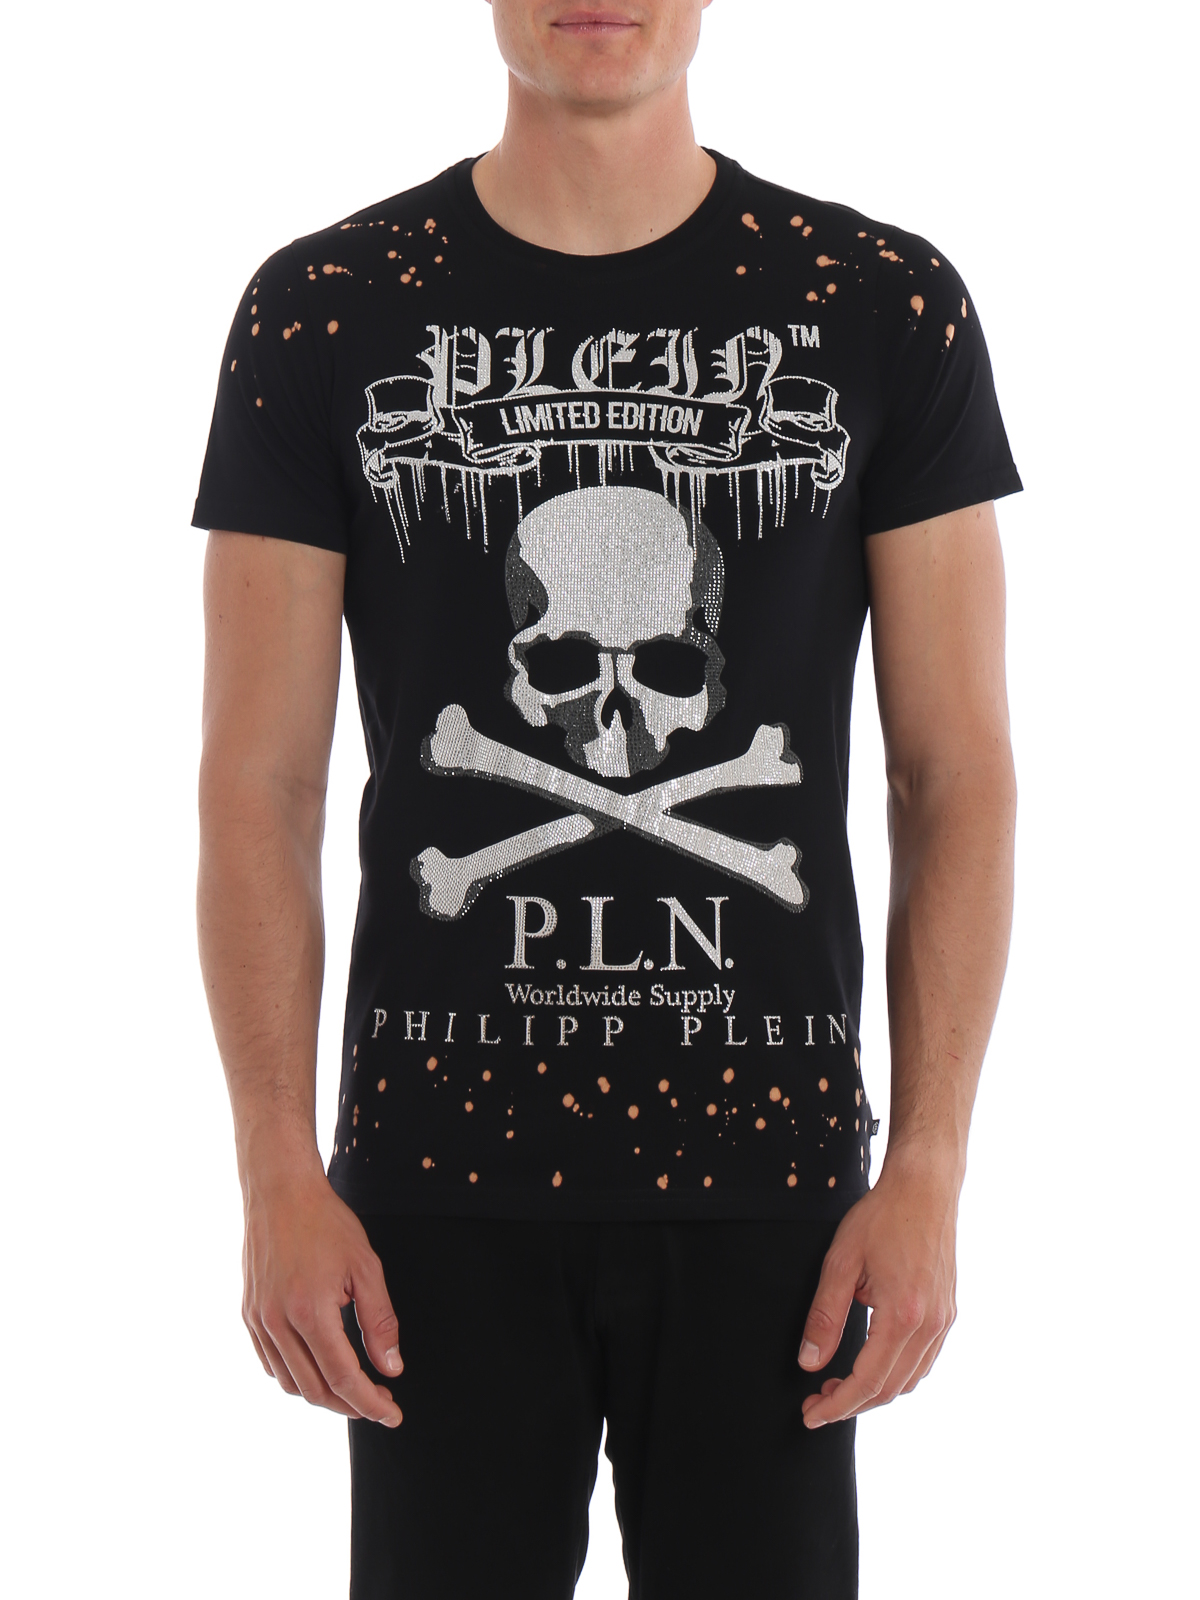 philipp plein t-shirt limited edition